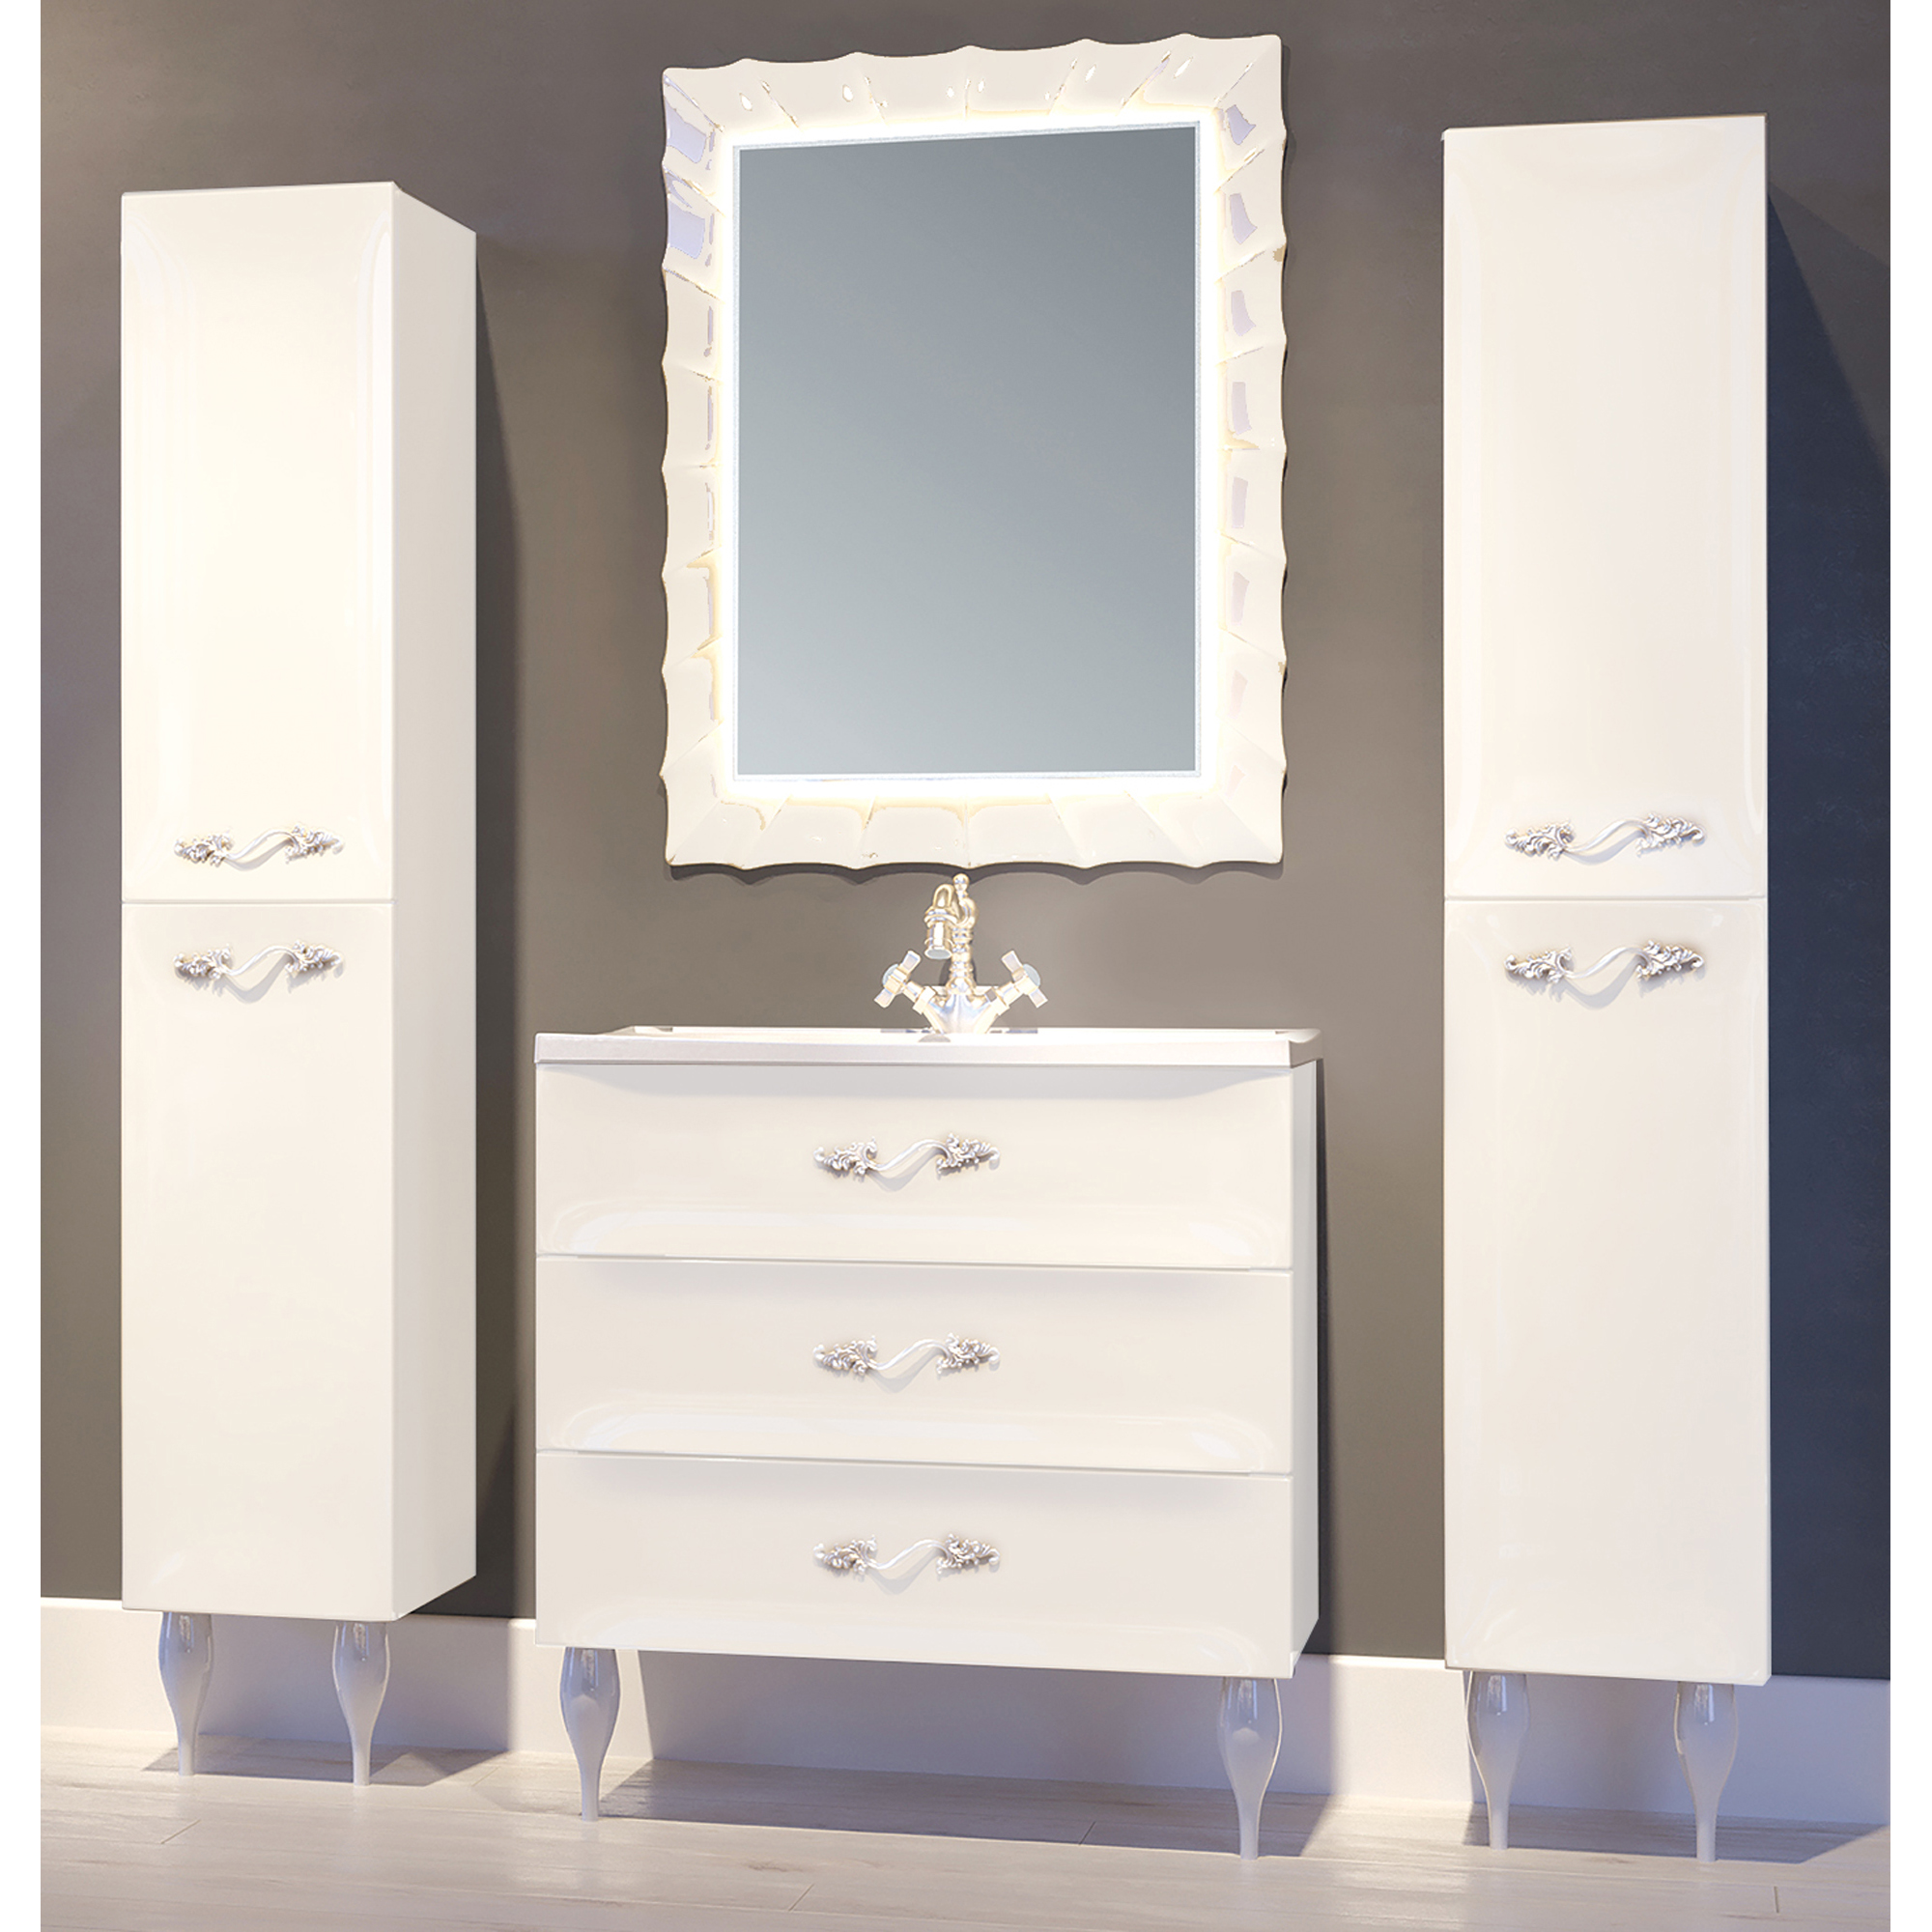 Марка мебели для ванной. Зеркало marka one Neoclassic 2. Мебель для ванной комнаты. Гарнитур для ванной. Мойдодыр для ванной комнаты с зеркалом.